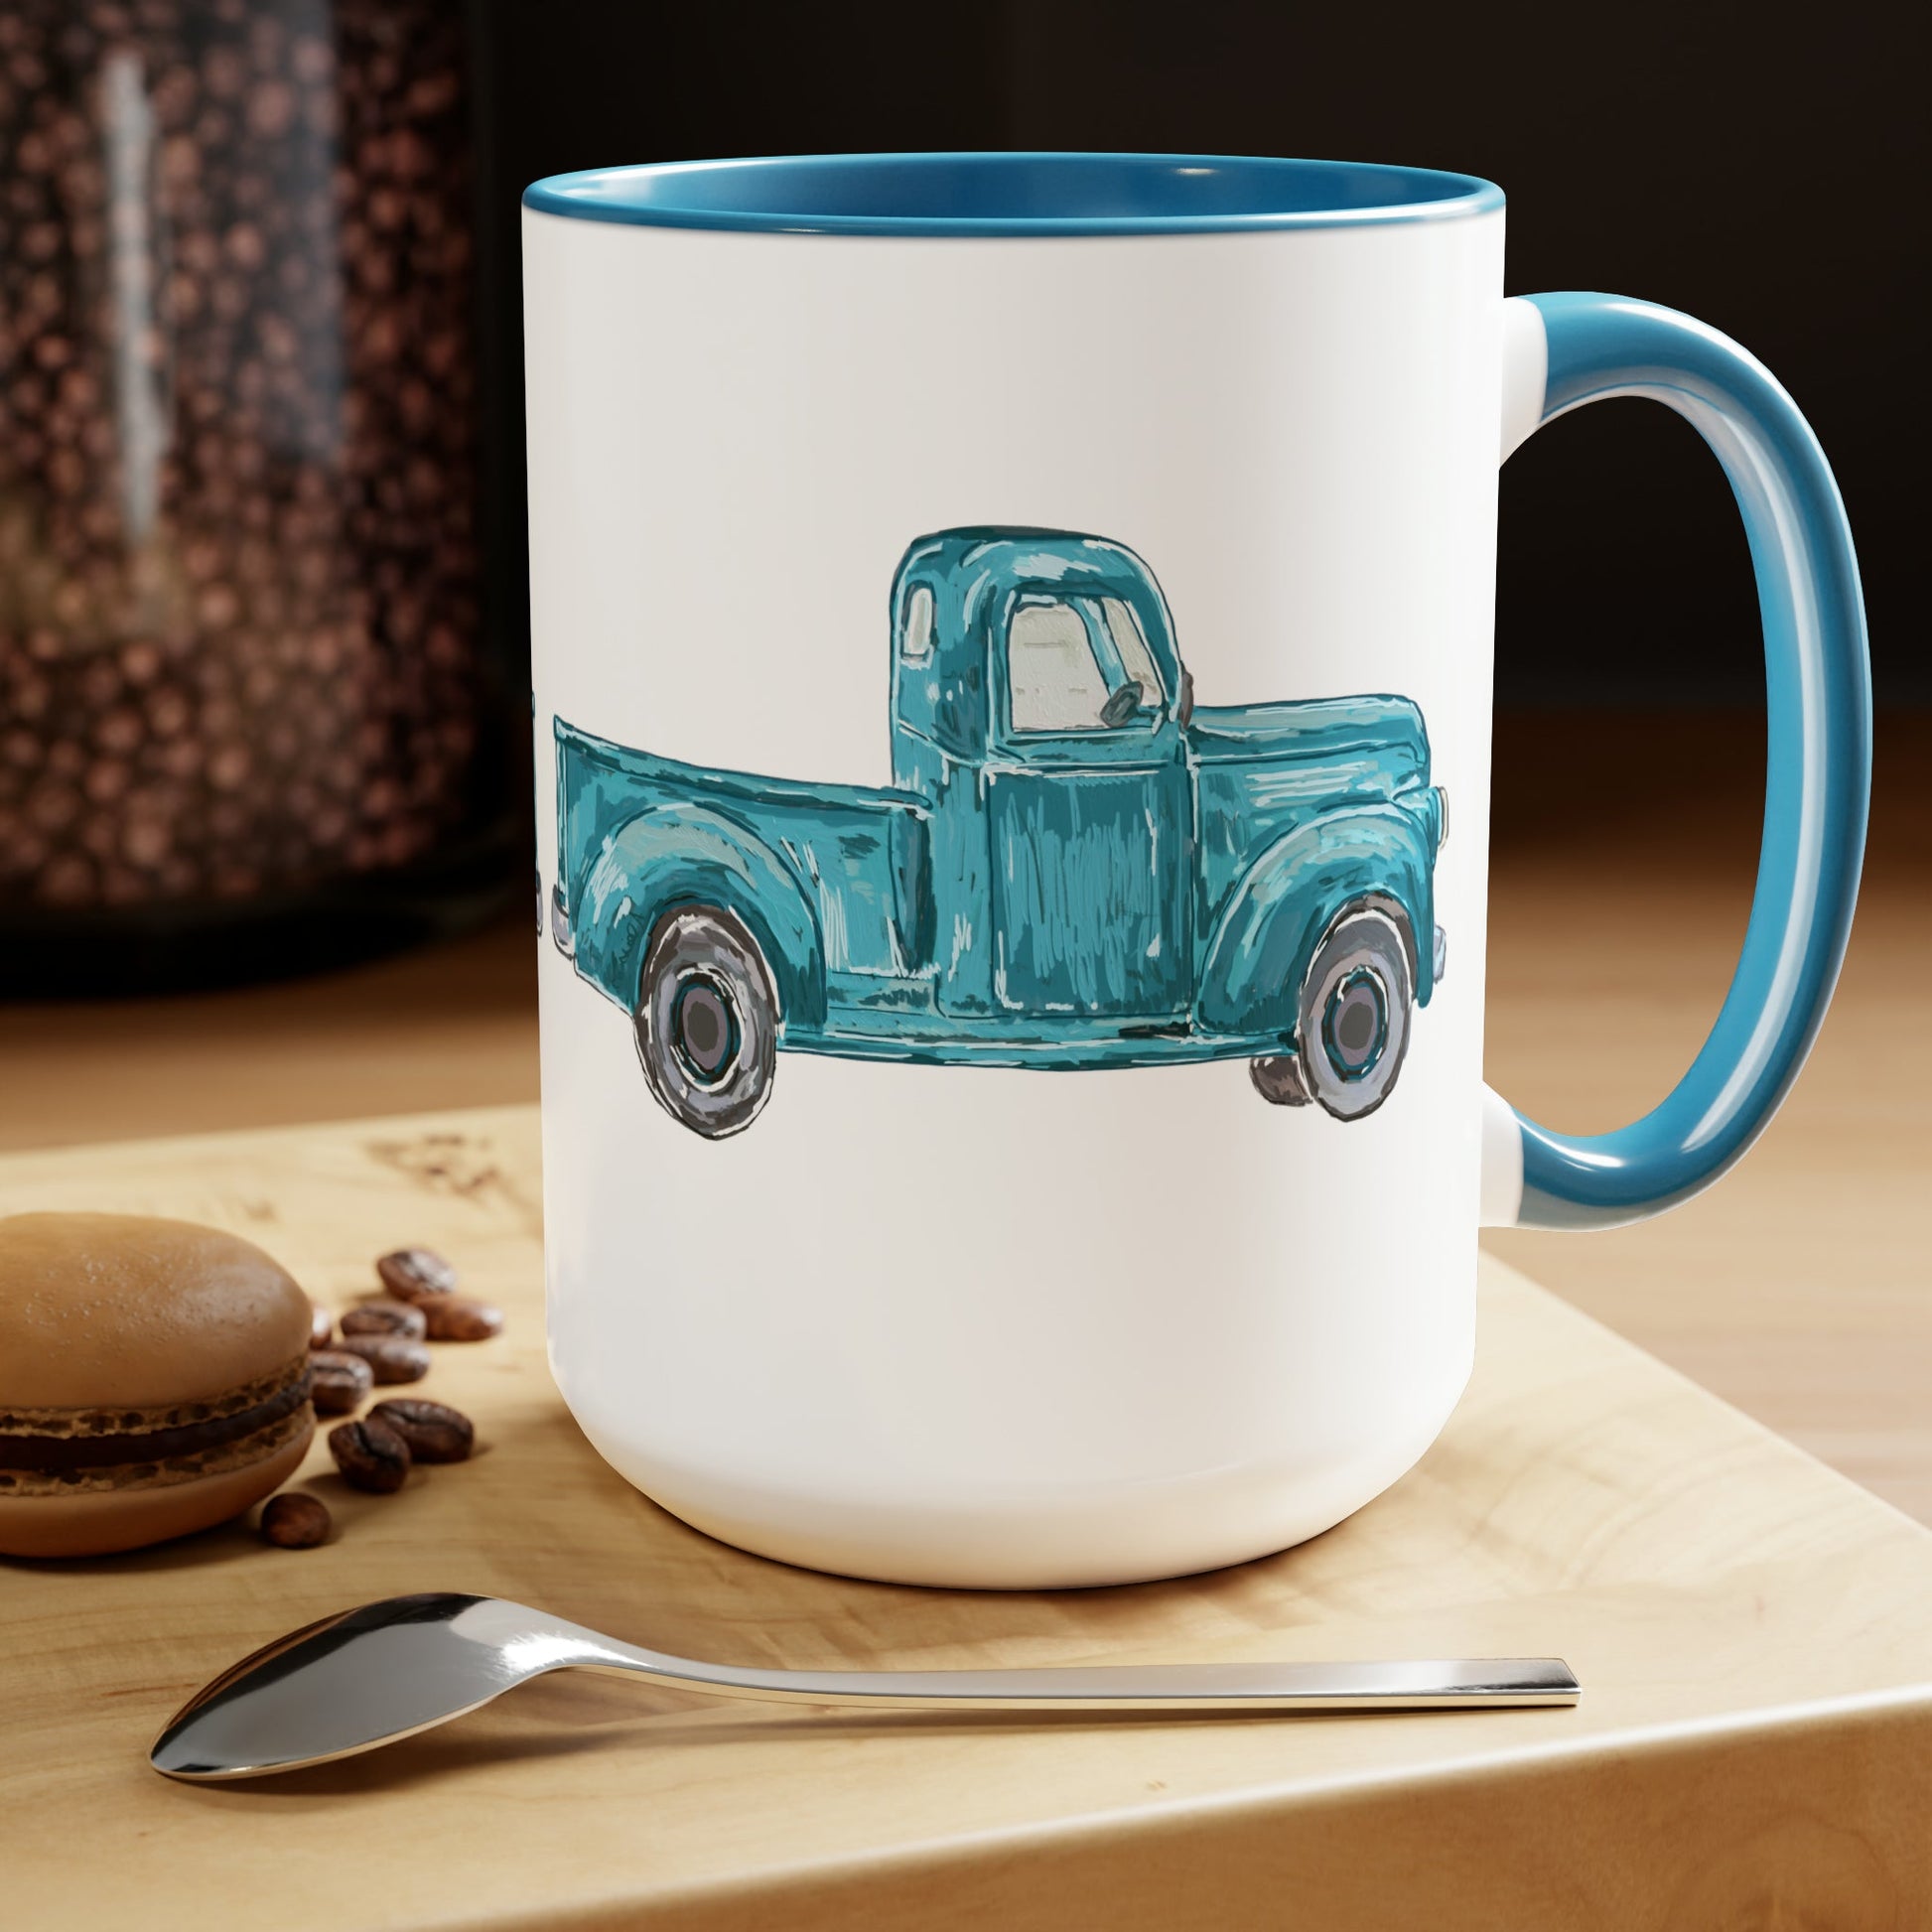 Antique Truck Two-Tone Coffee Mugs, 15oz - Blue Cava